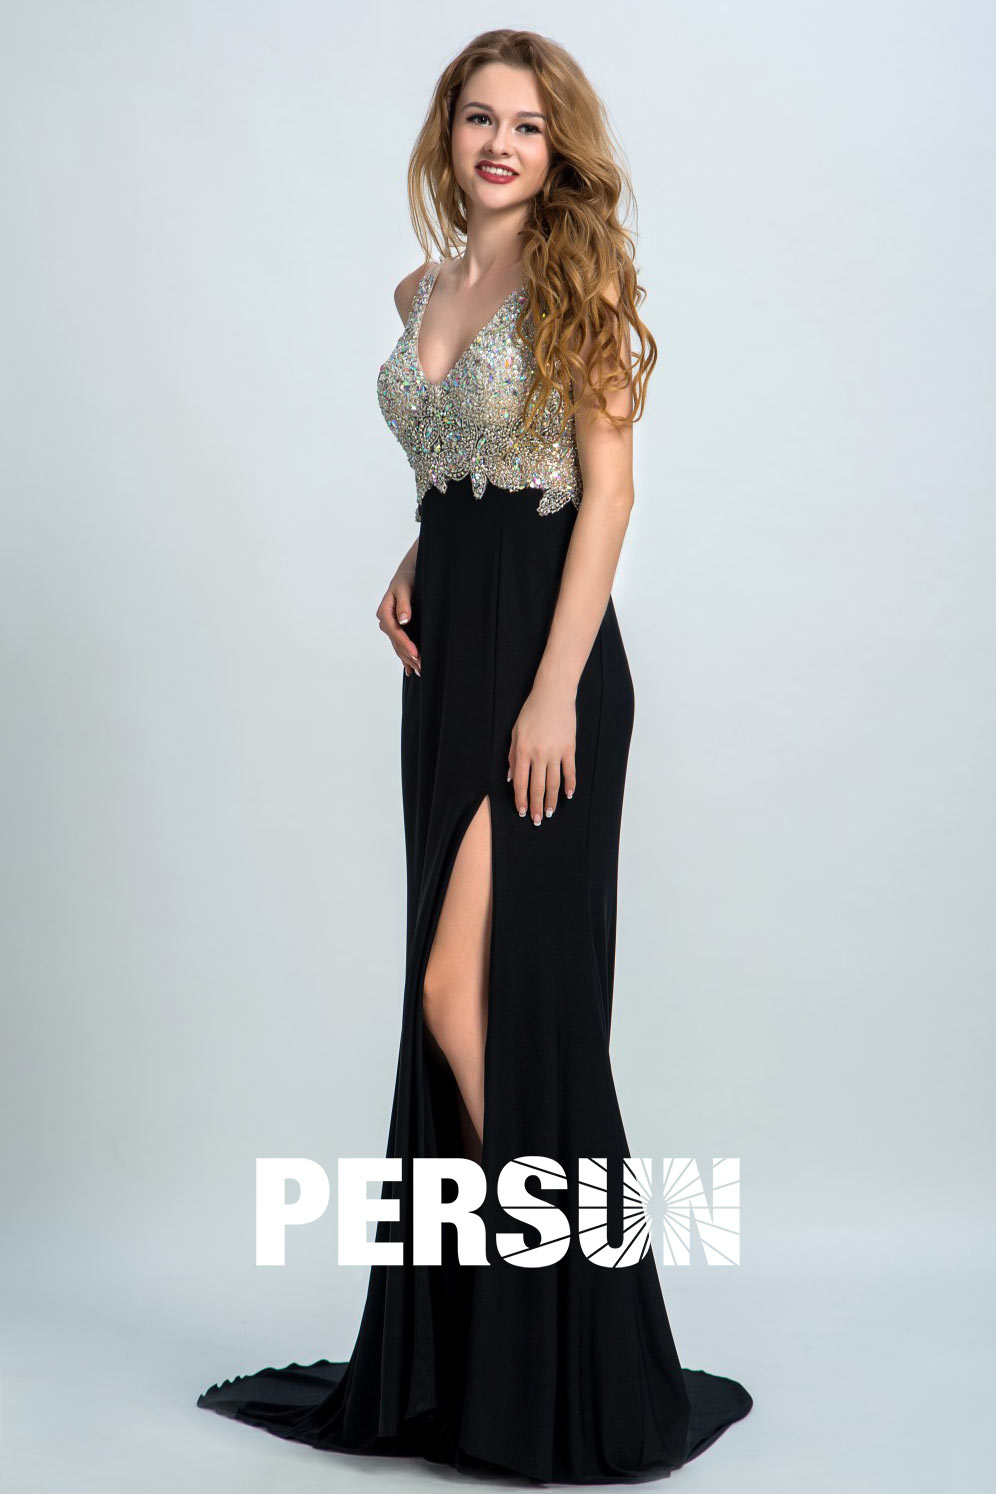 Persun Mermaid V Neck Crystal Details Backless Prom Dress